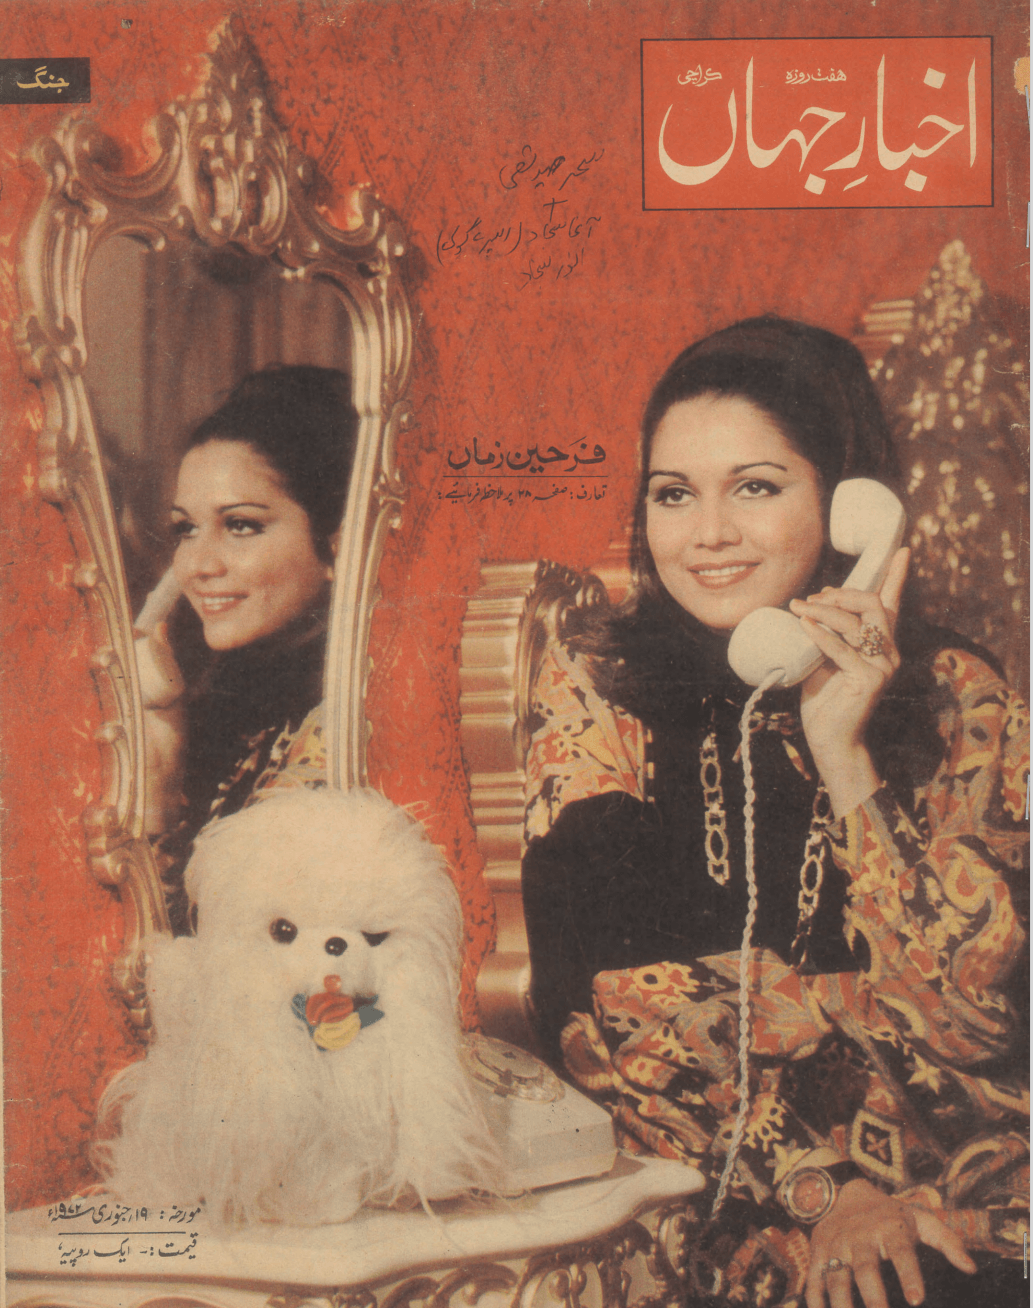 Akhbar-e-Jahan (Jan 3, 1972)